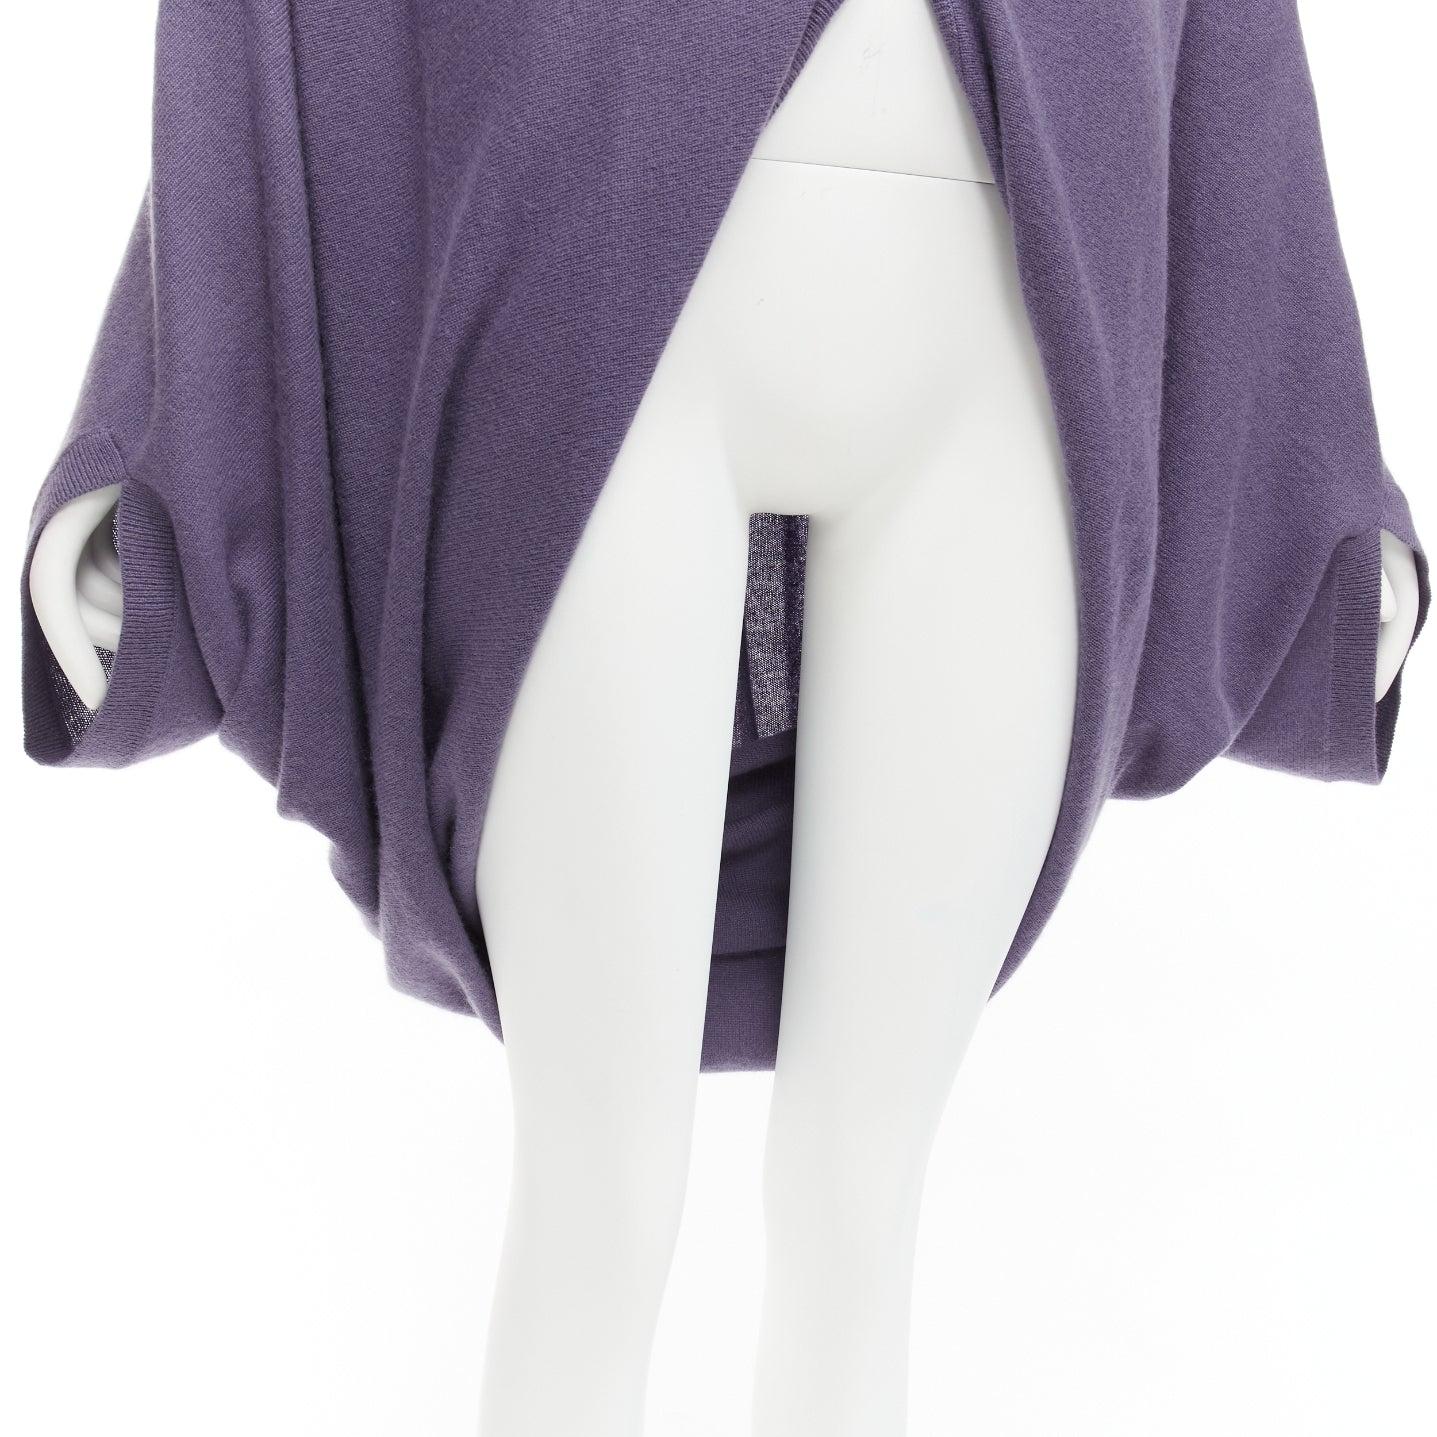 TSE 100% pure cashmere purple low cut batwing shawl cardigan For Sale 3